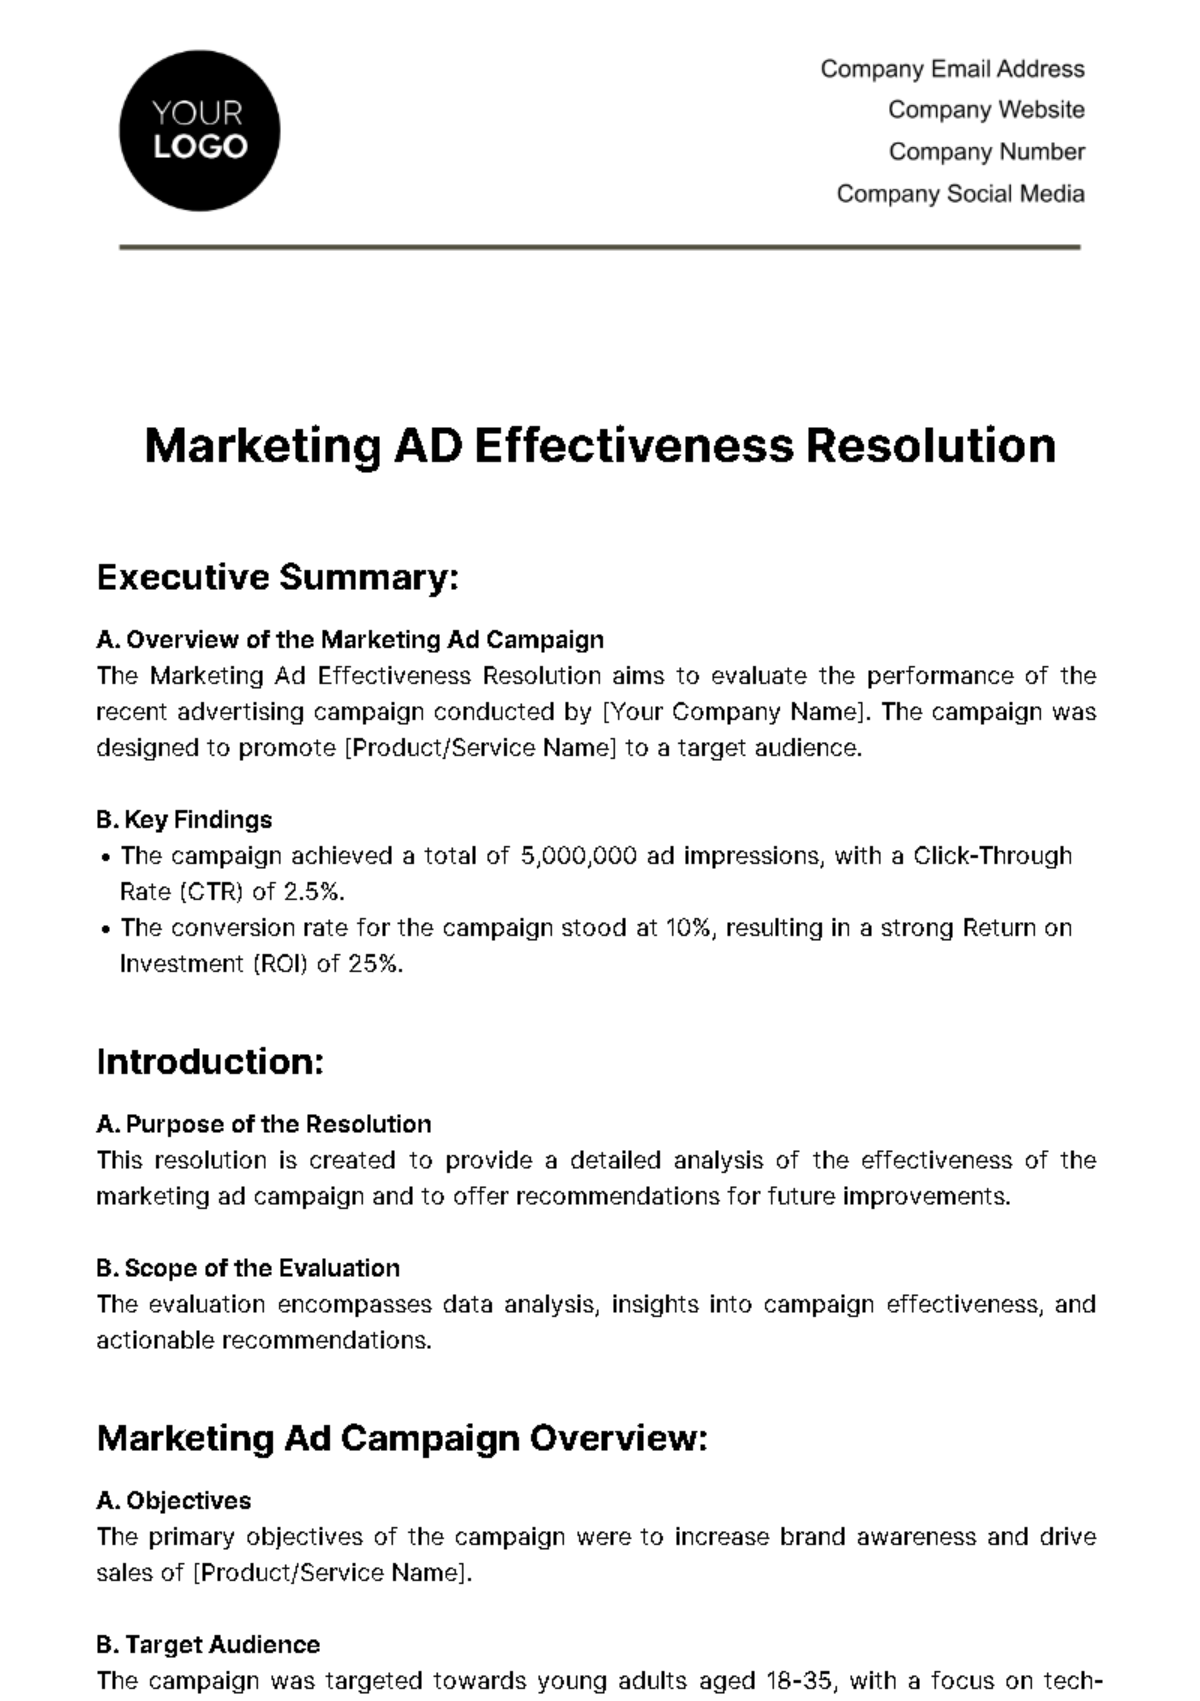 Free Marketing Ad Effectiveness Resolution Template